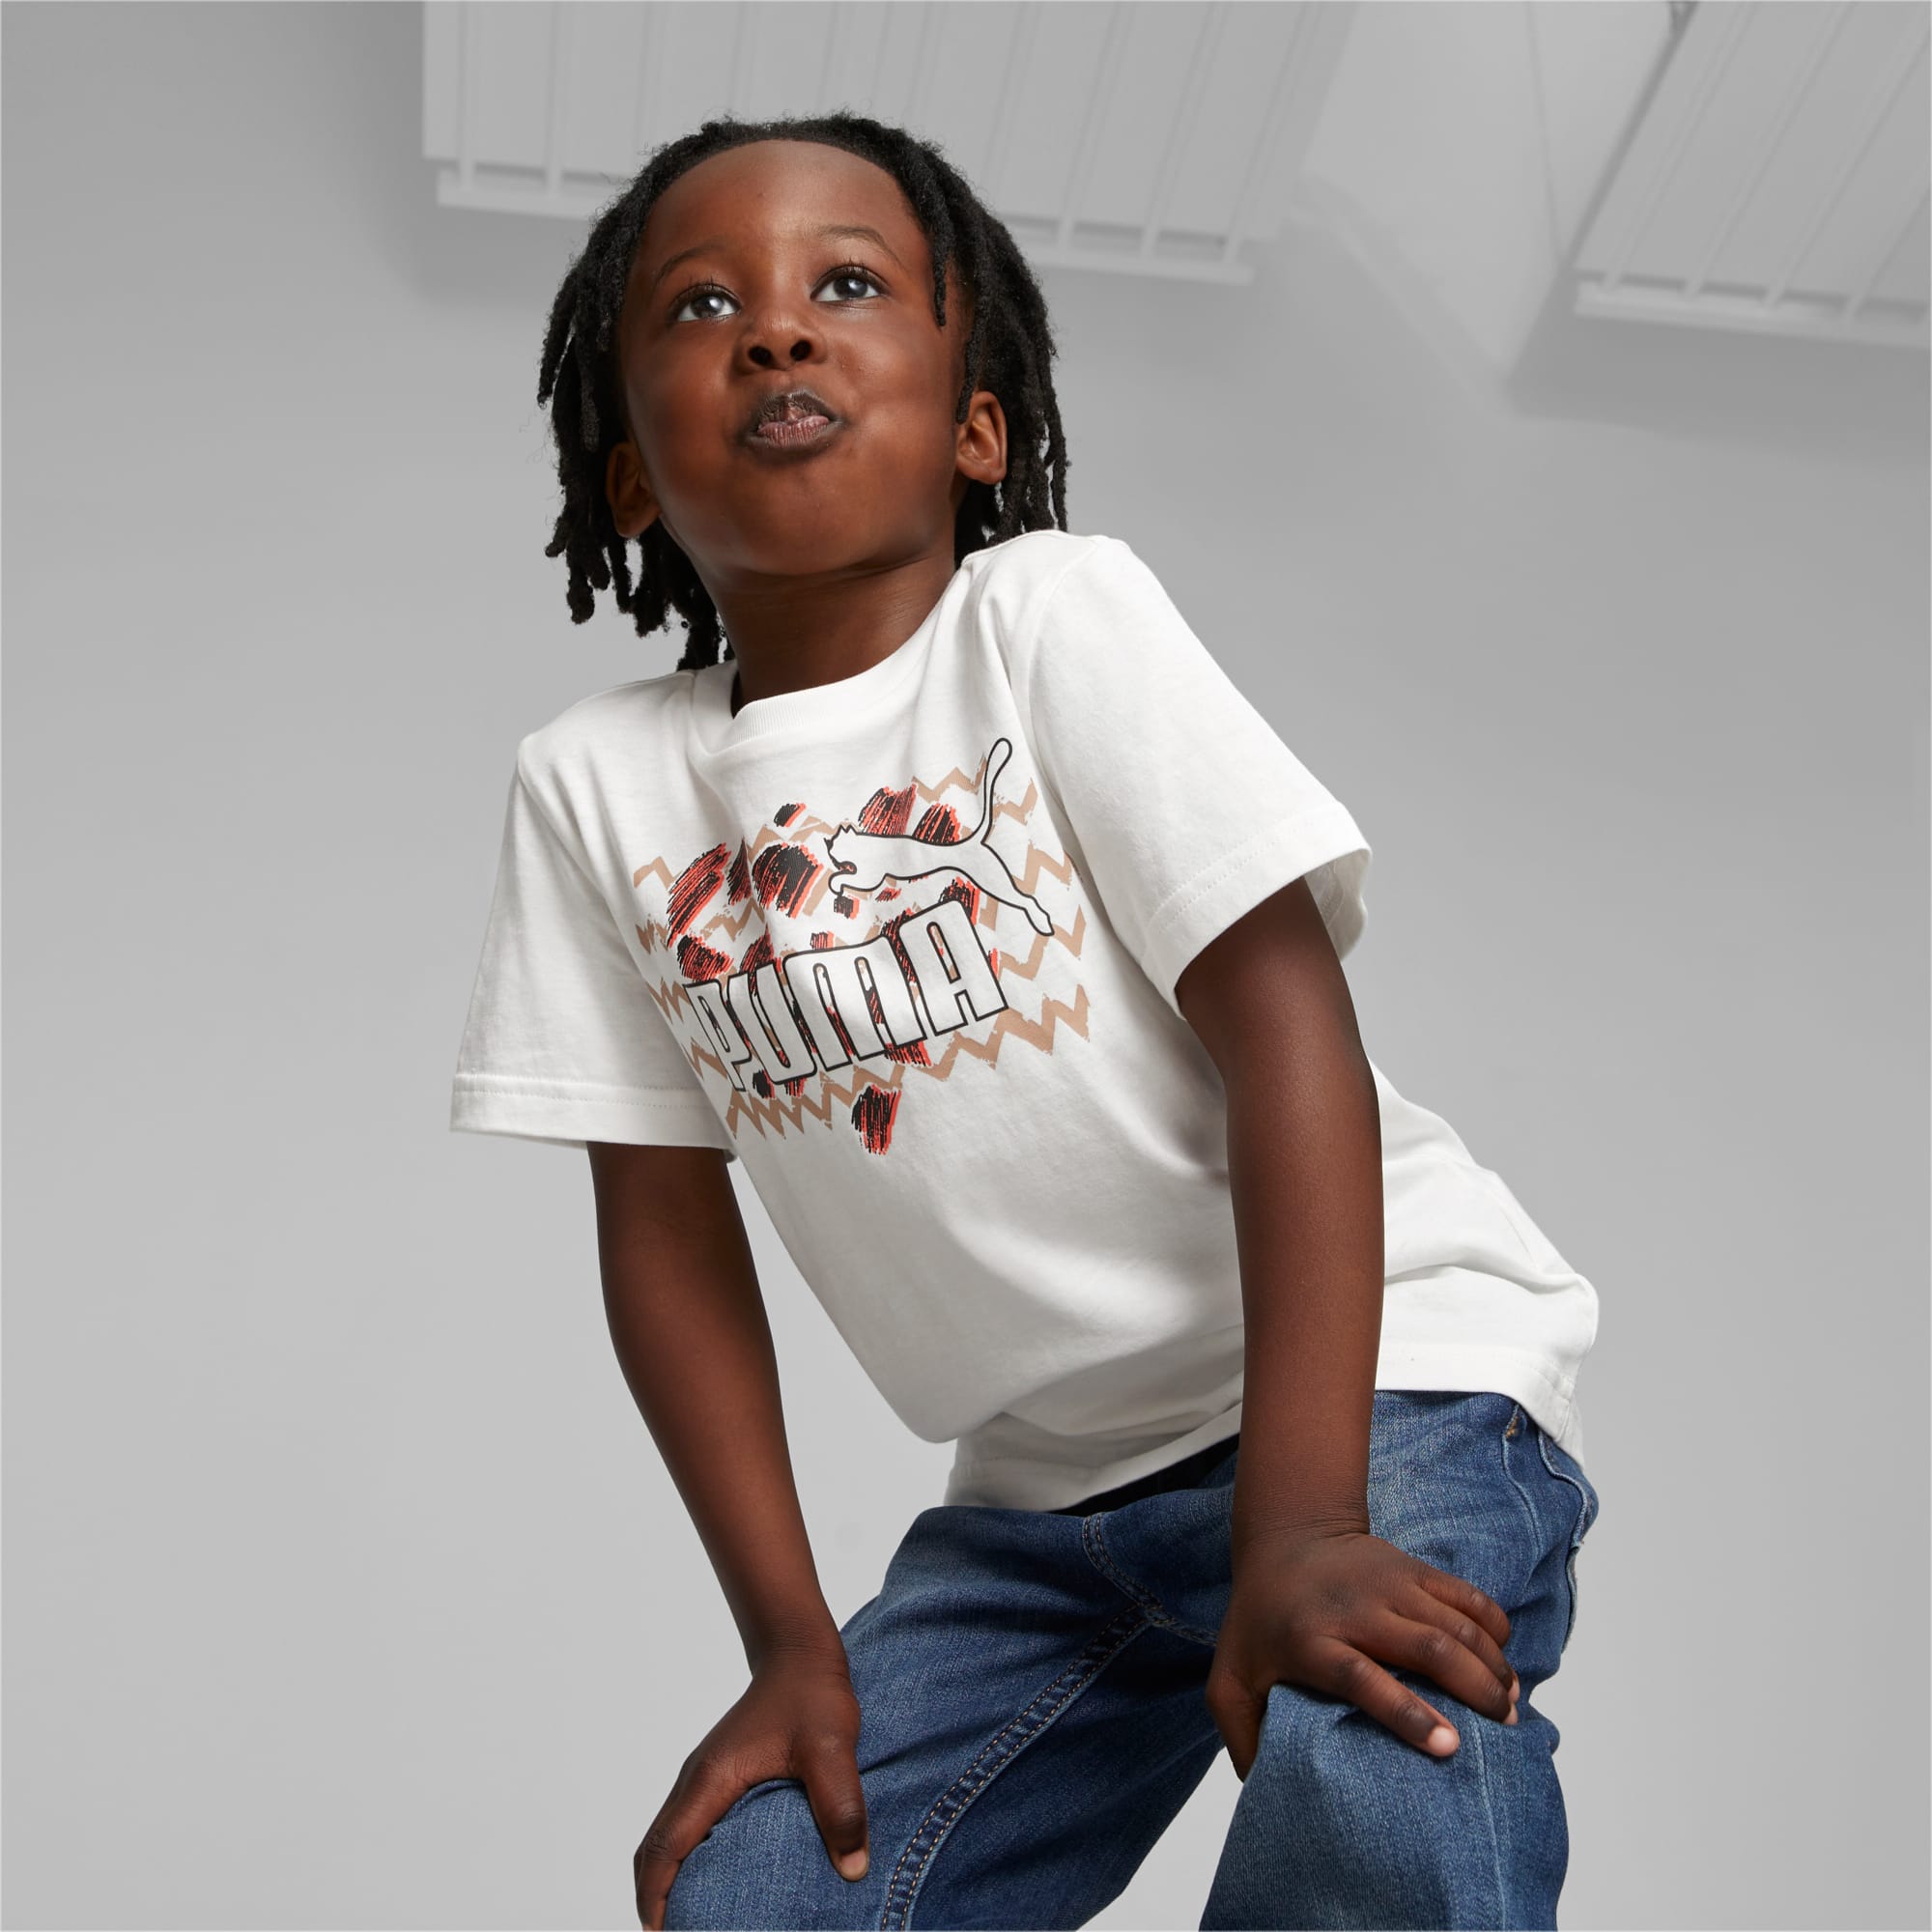 PUMA Essentials Mix Match Kids' T-Shirt, White, Size 92, Clothing